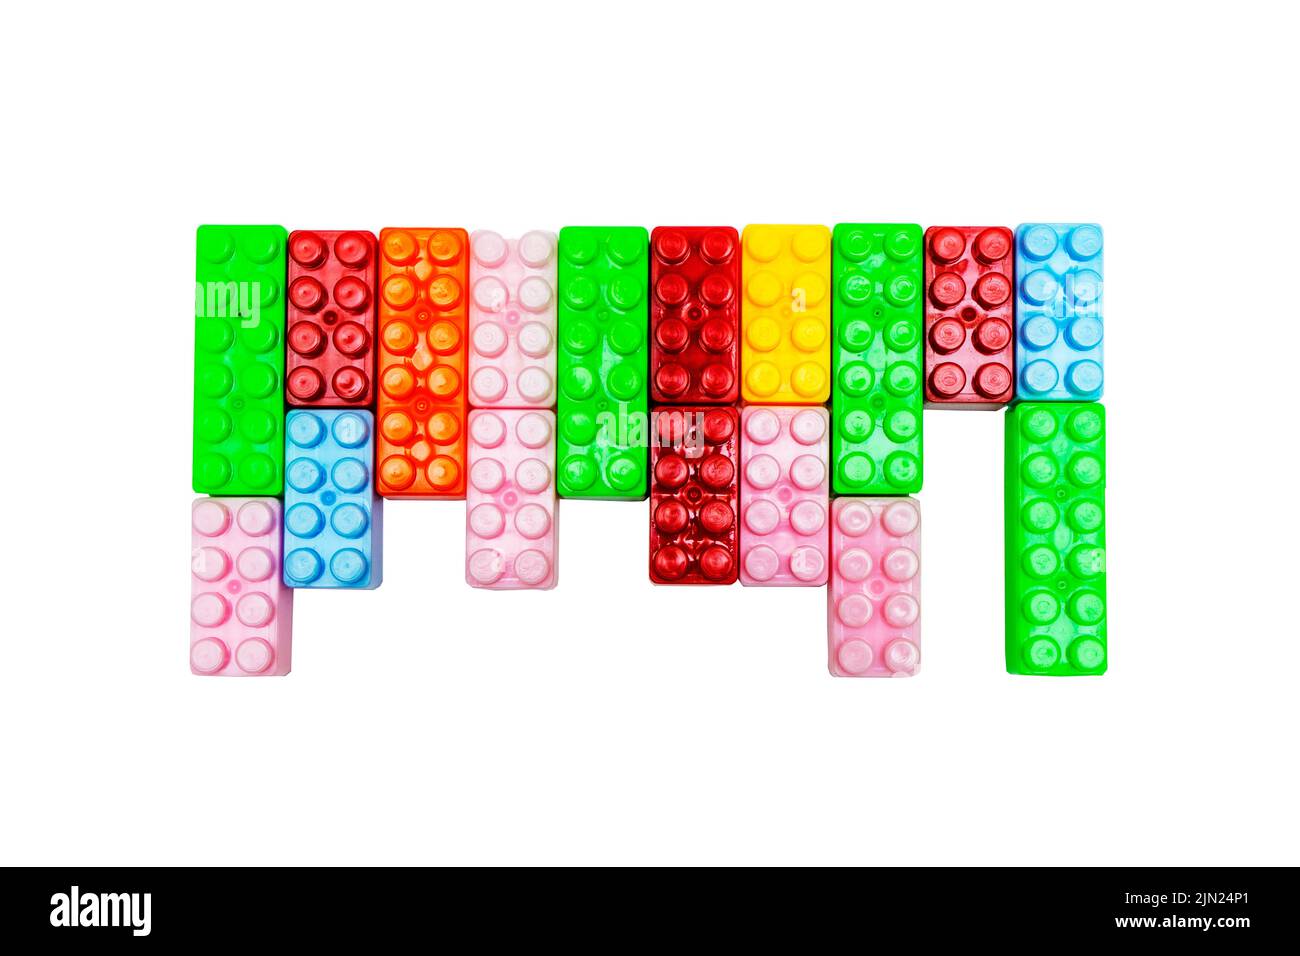 Toy colorful plastic blocks isolated on white background Stock Photo